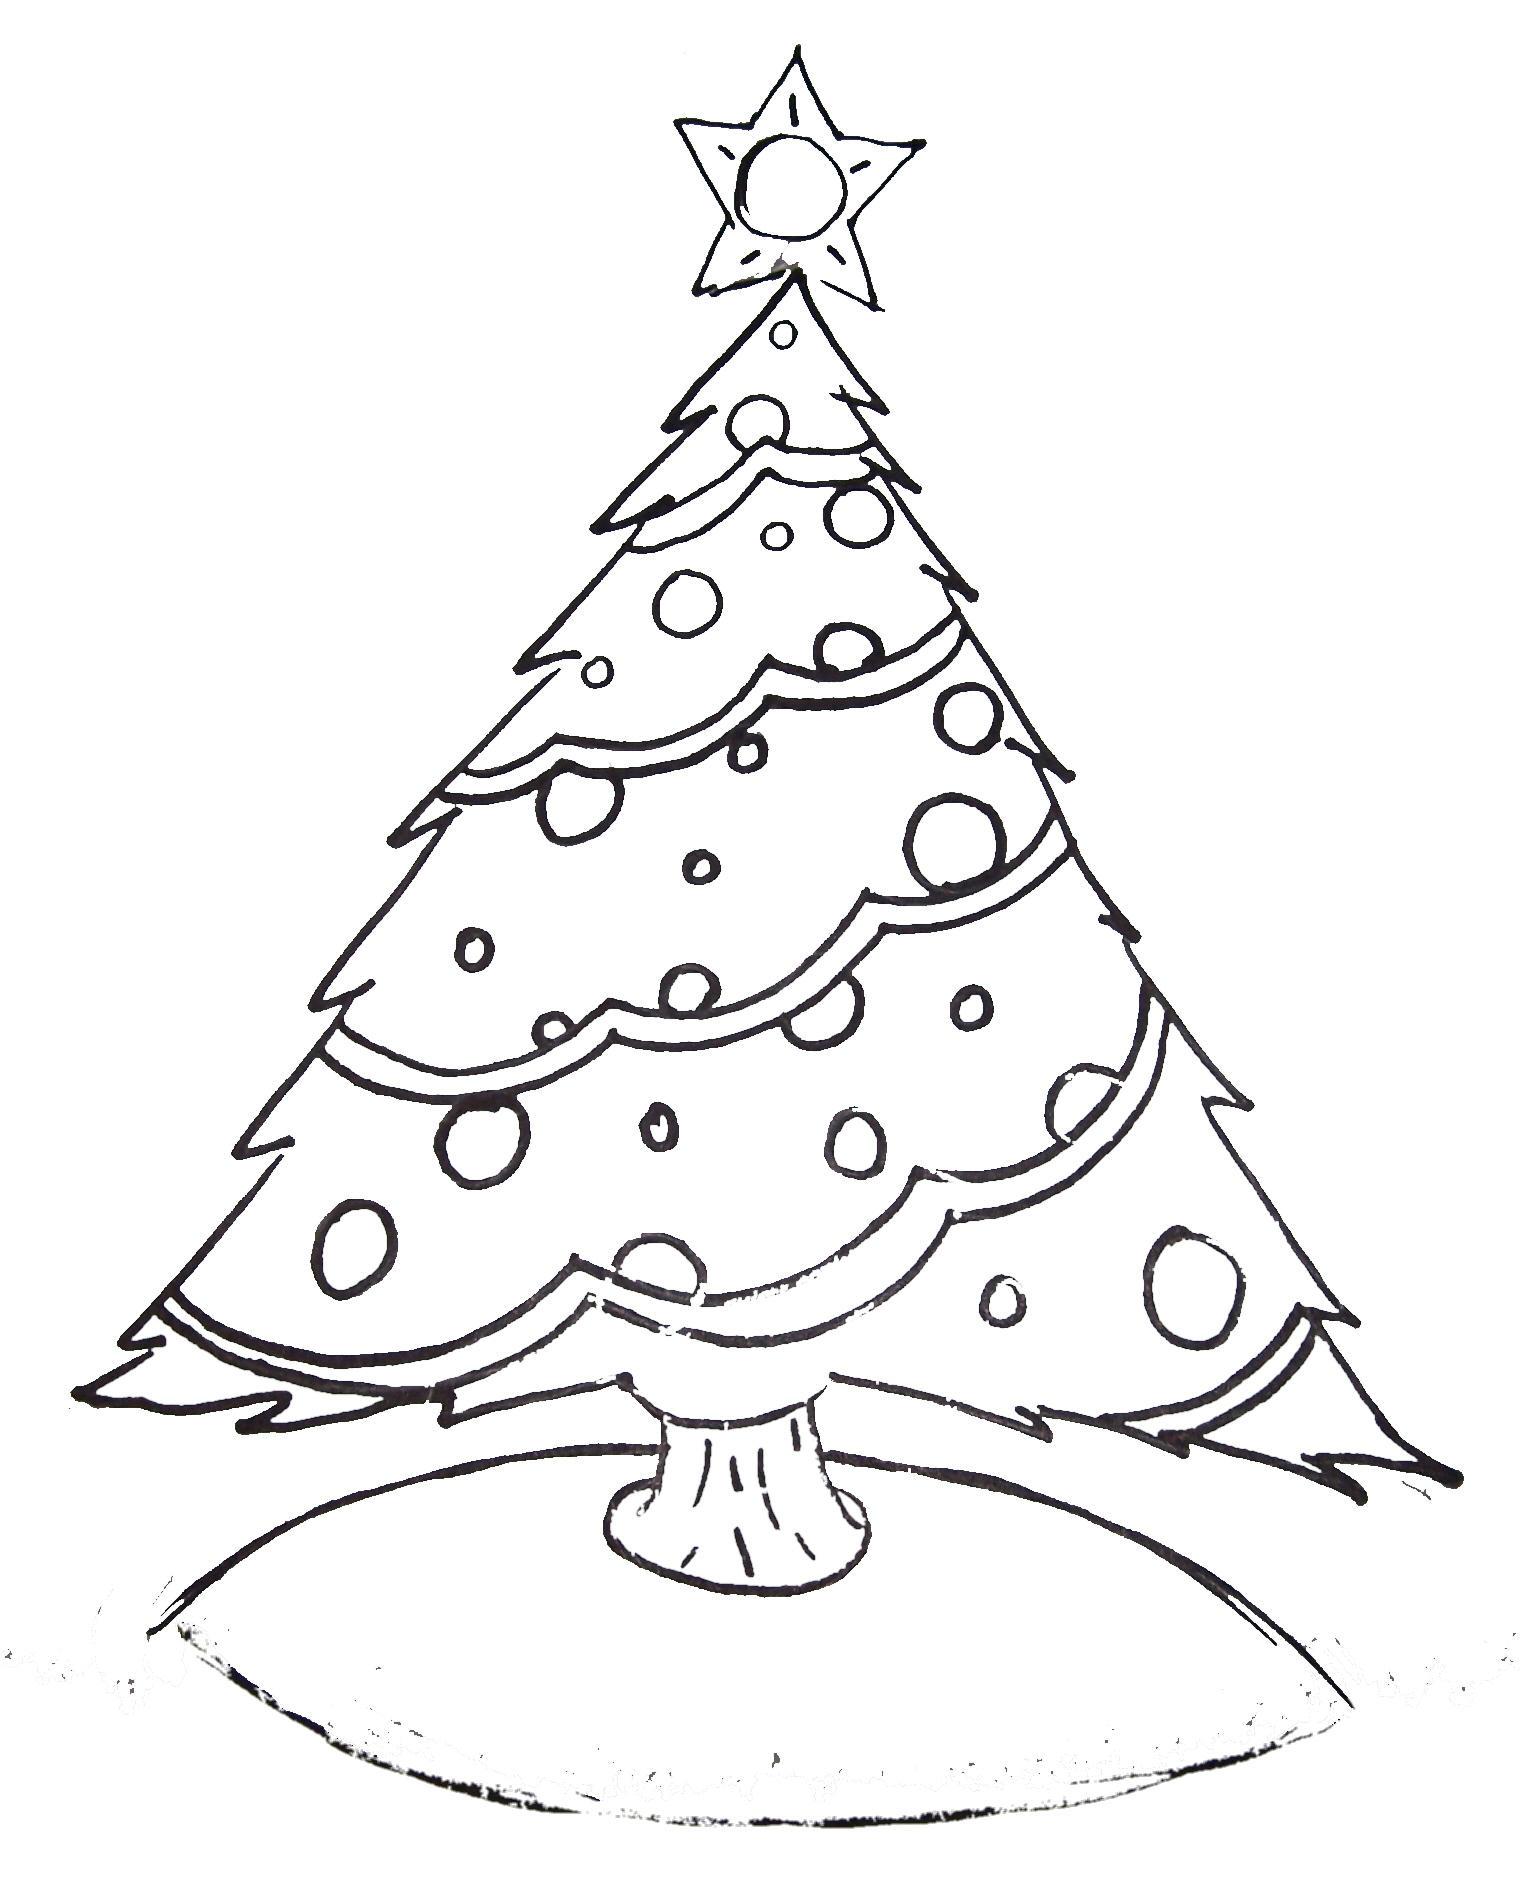 Free Printable Christmas Tree and Santa Coloring Pages - Kids Creative